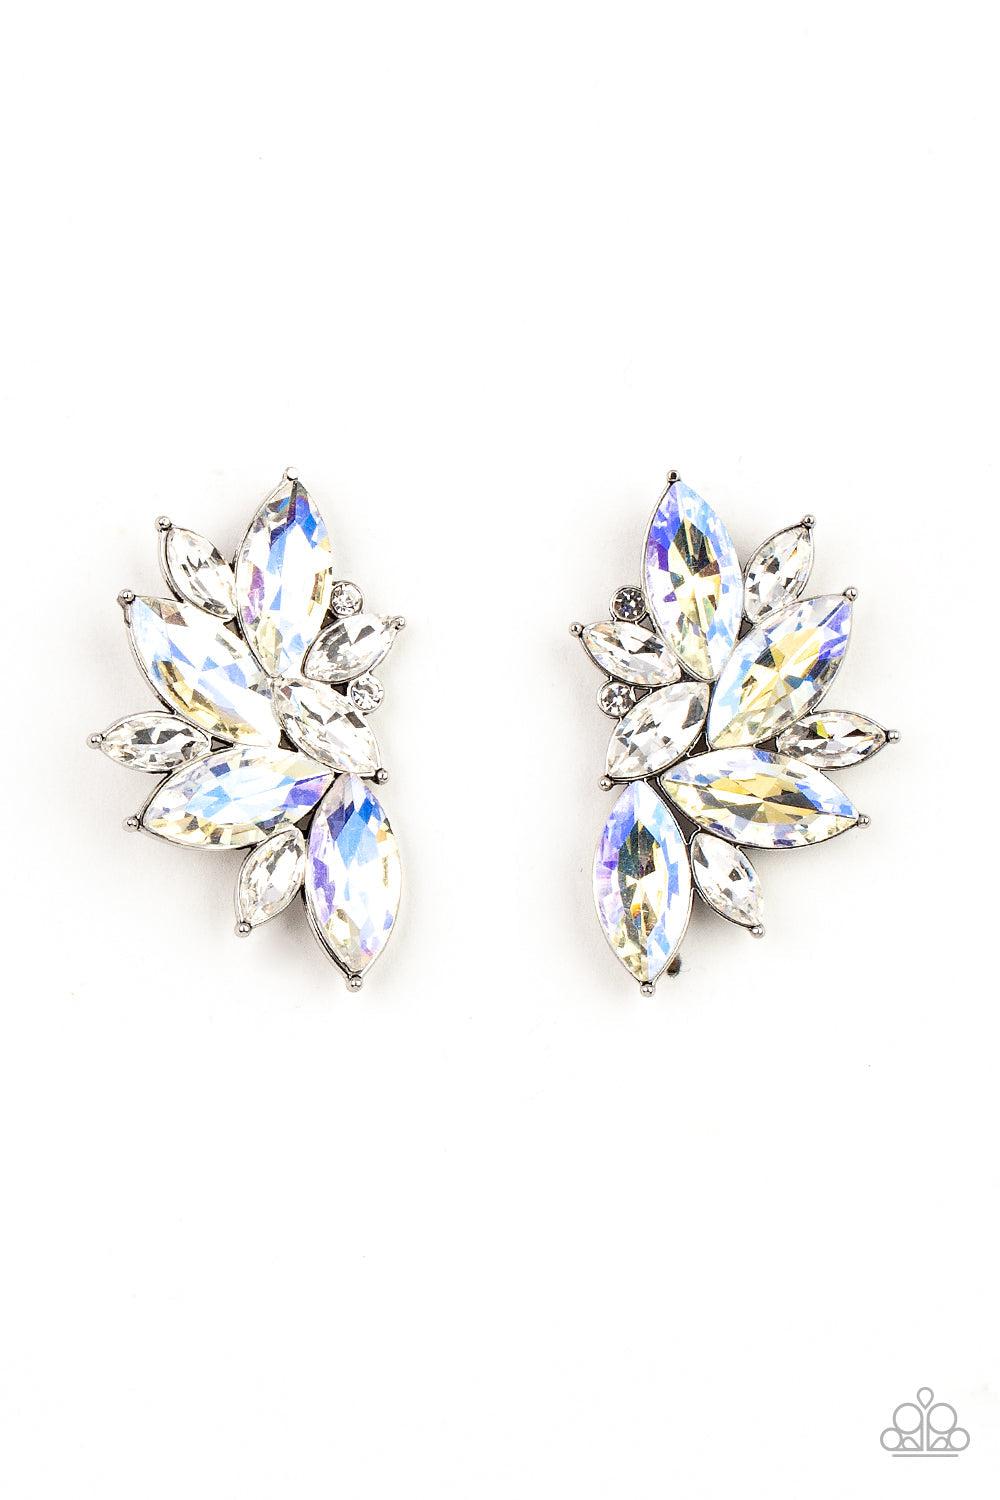 Instant Iridescence White Iridescent Rhinestone Earrings - Paparazzi Accessories- lightbox - CarasShop.com - $5 Jewelry by Cara Jewels